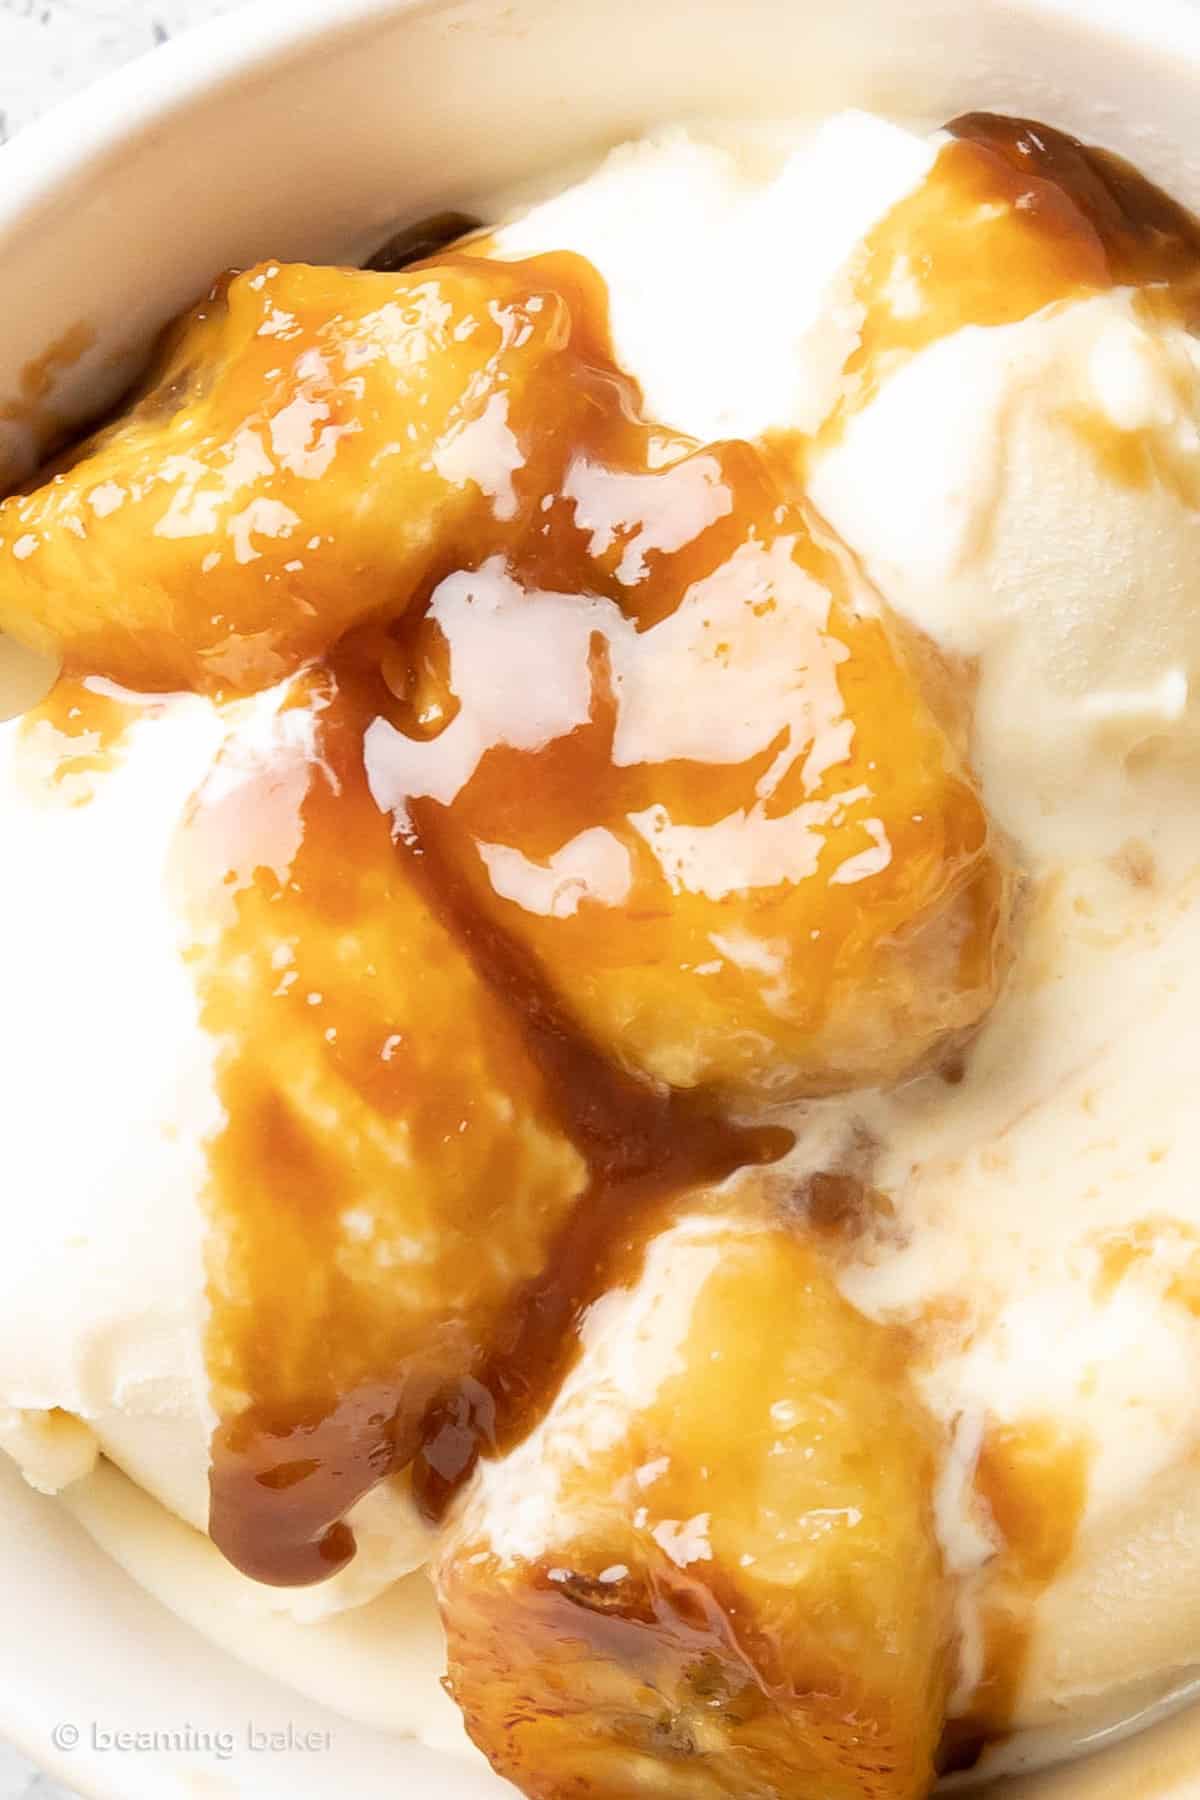 extra gooey caramel drizzle atop bananas and vanilla ice cream